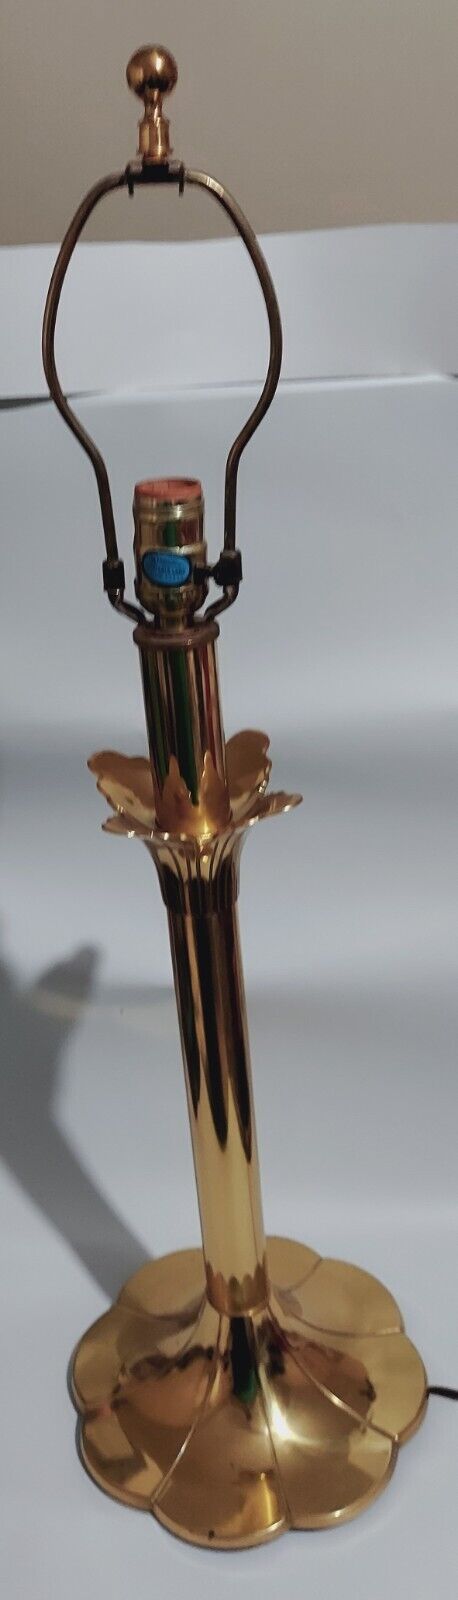 Vintage Brass Stiffel Tulip Lily Table Lamp 6163 Mid century Regency